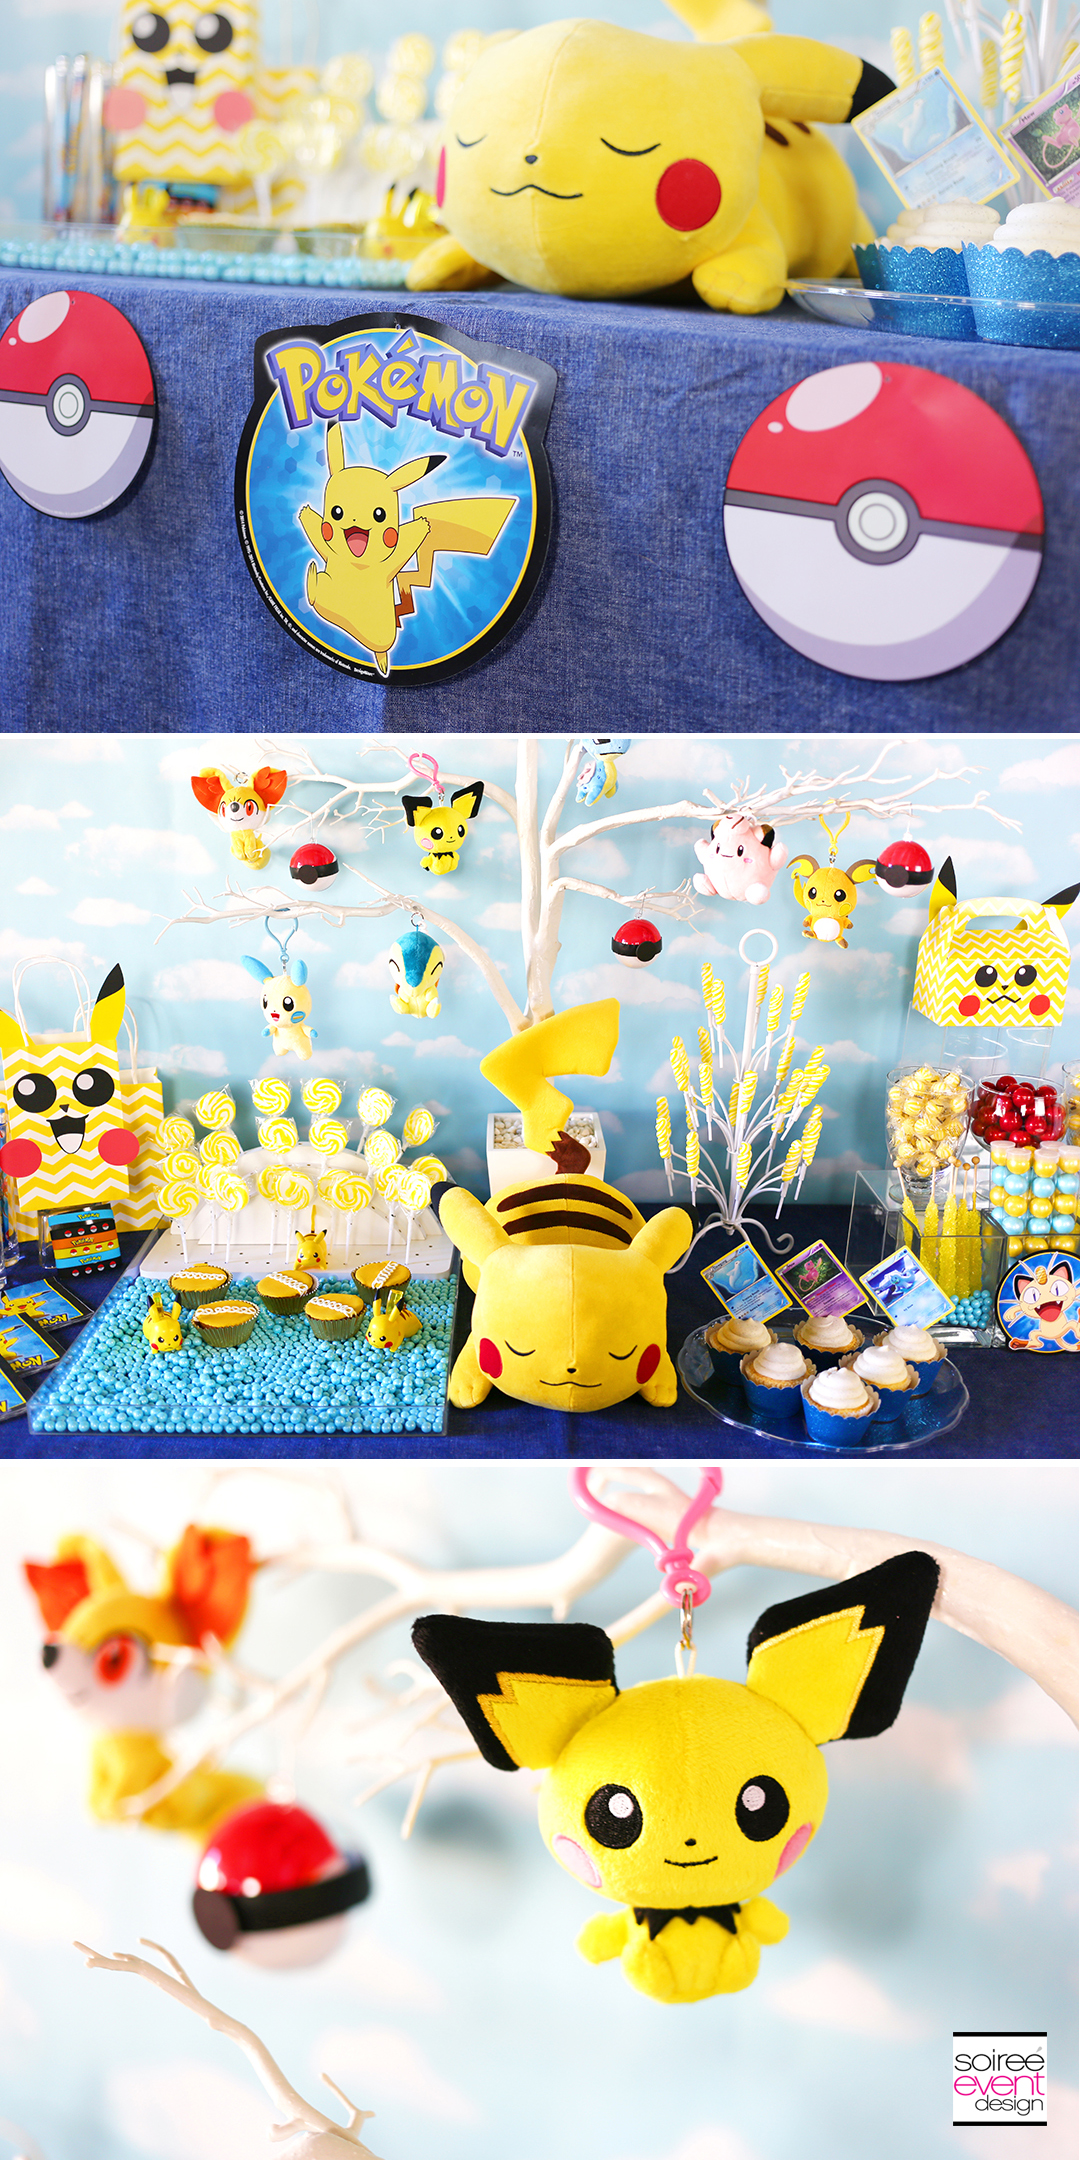 Pokemon Party Ideas, Pokemon Party Decorations, Pokemon Candy Table